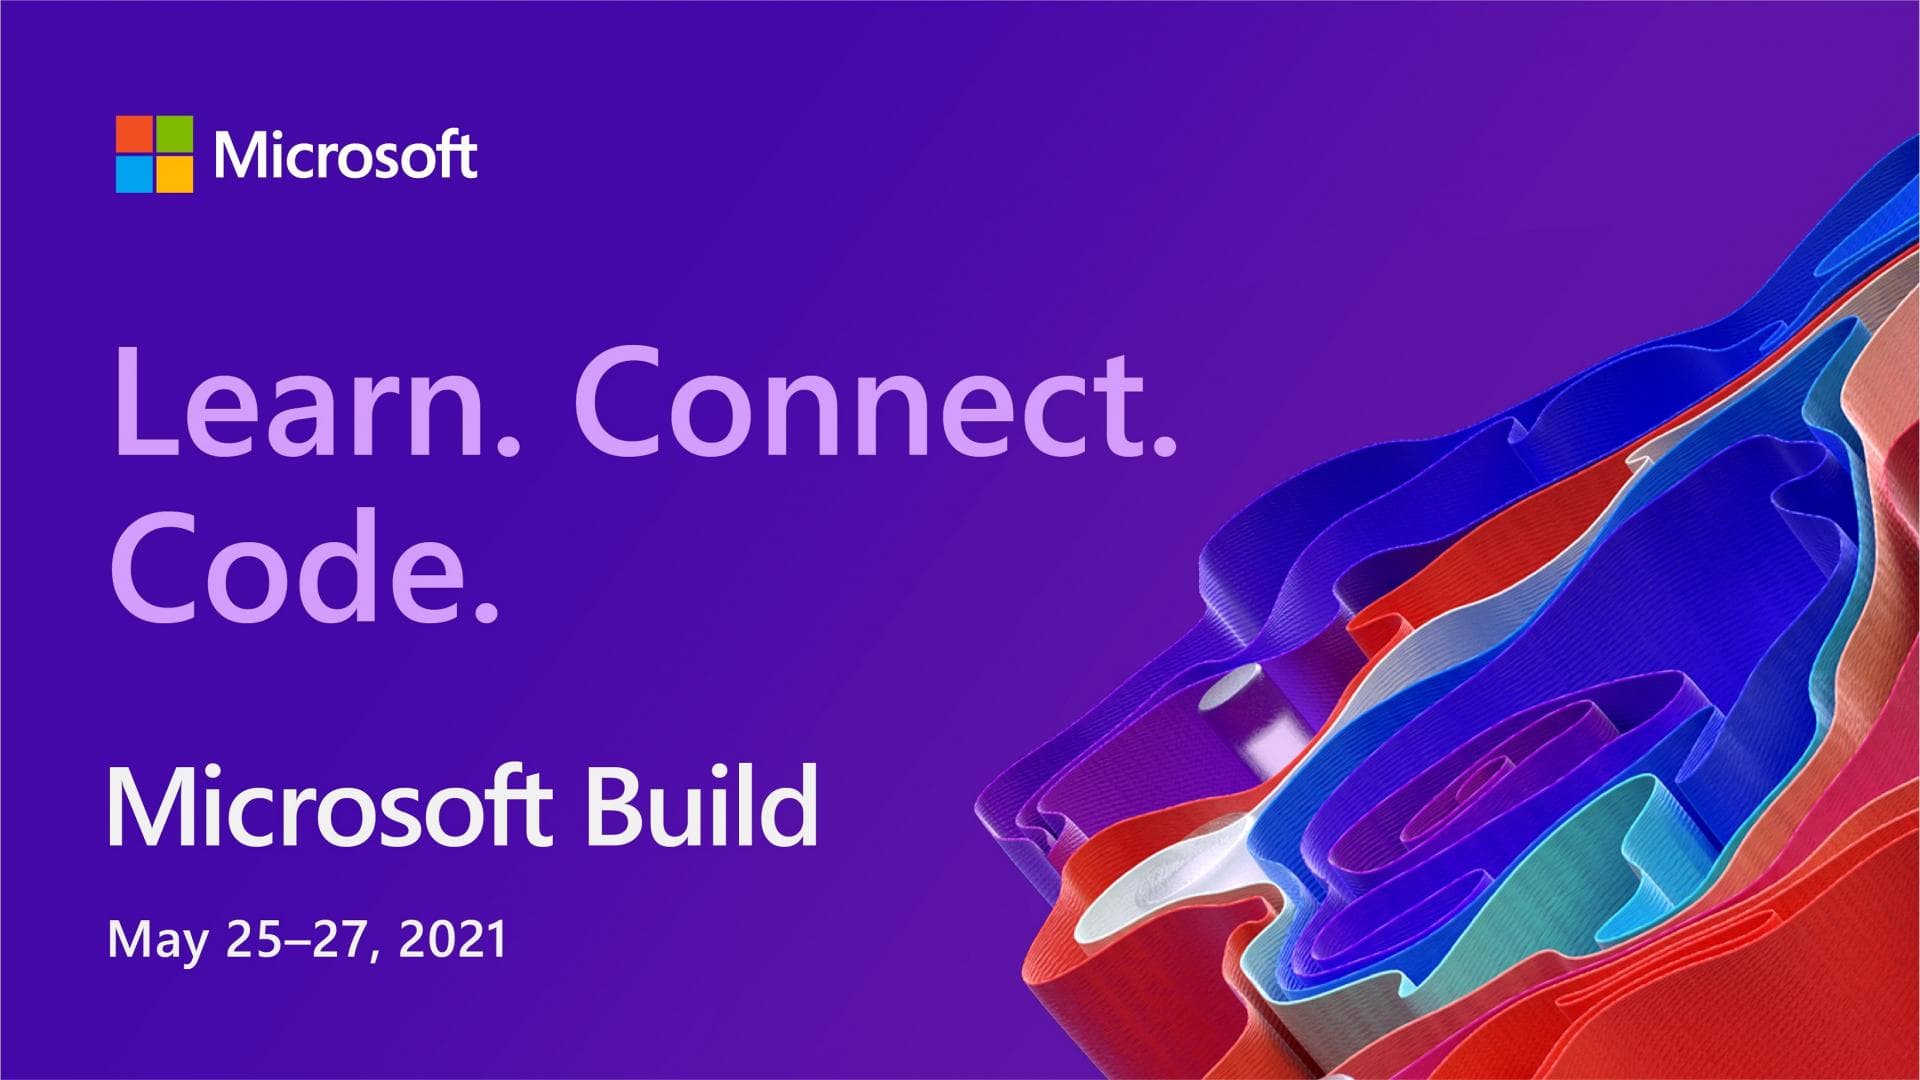 Banner promoting Microsoft Build